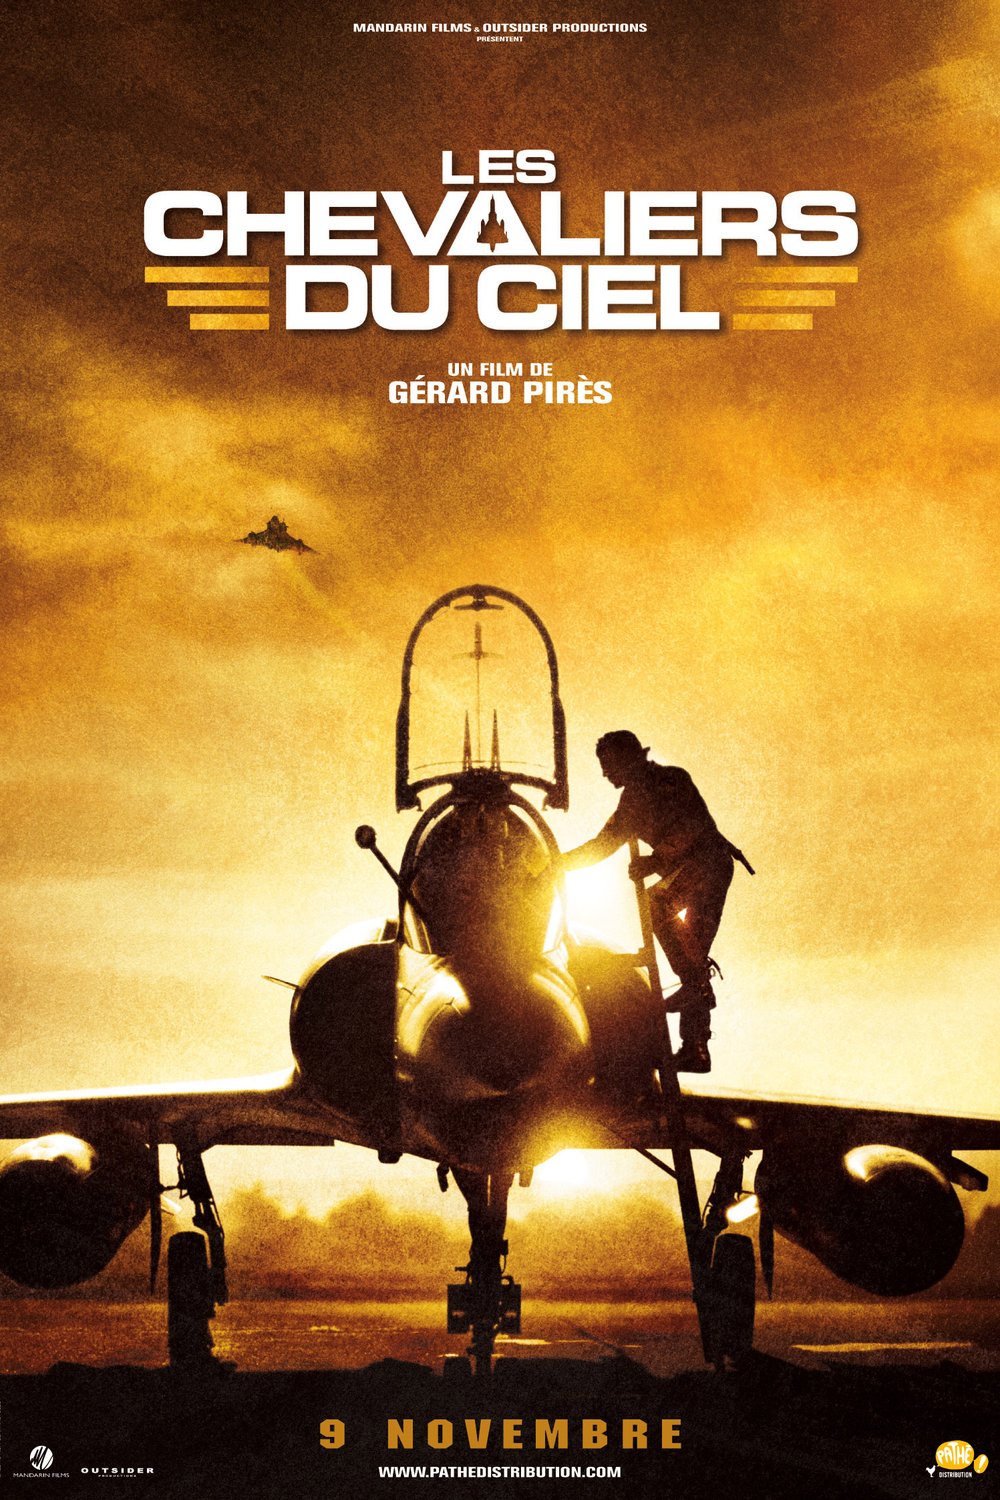 Poster of the movie Les Chevaliers du ciel